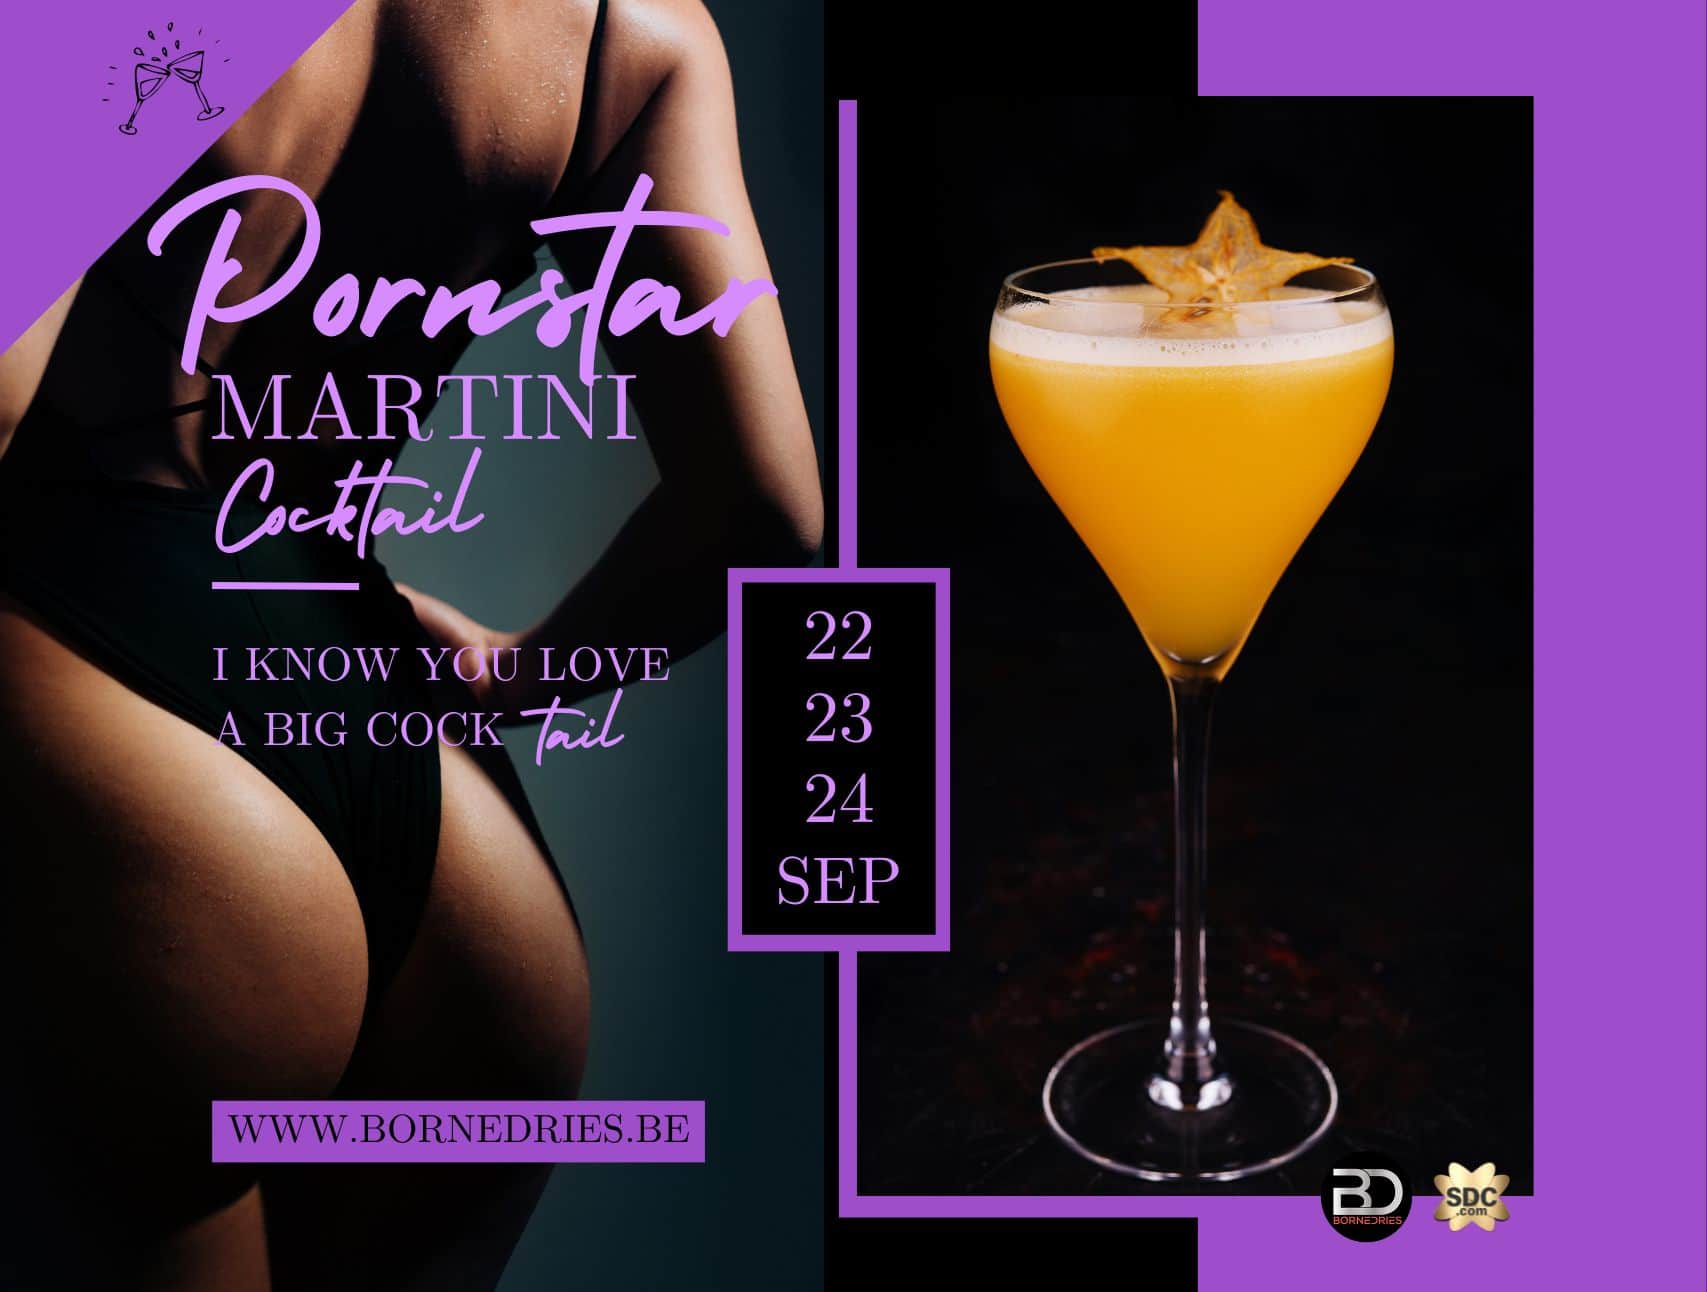 Martini Pornstar Party at Parenclub Bornedries (1707 × 1292 px)